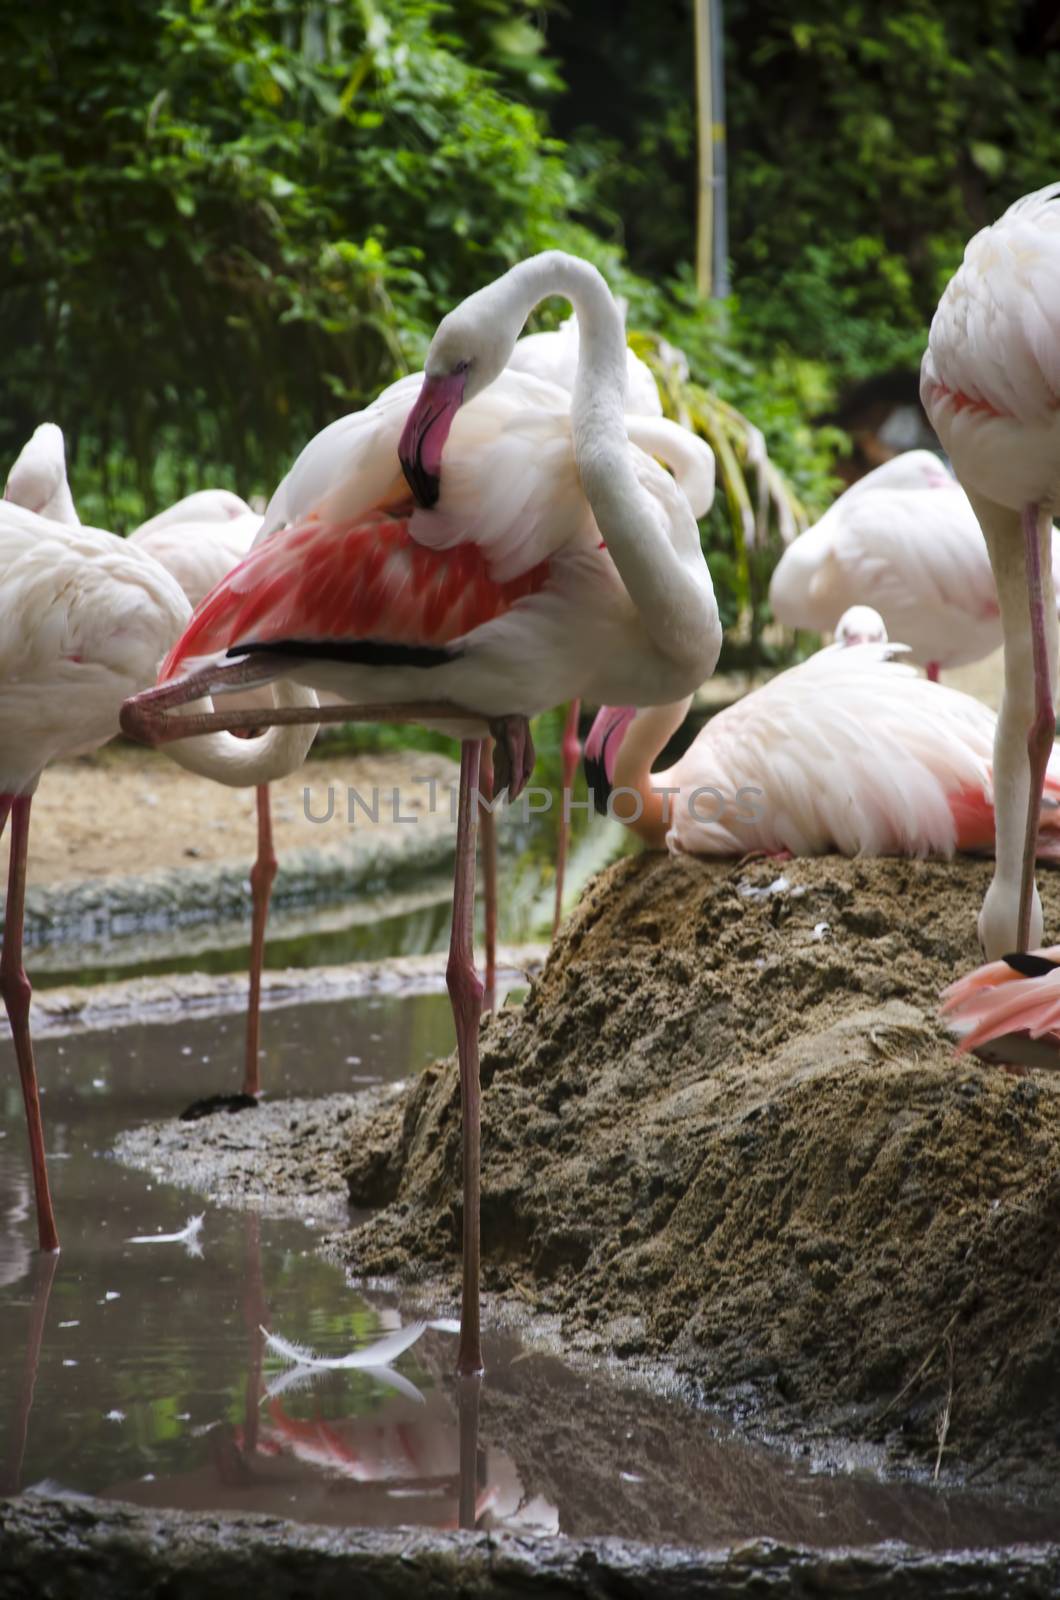 flamingo birds by siiixth